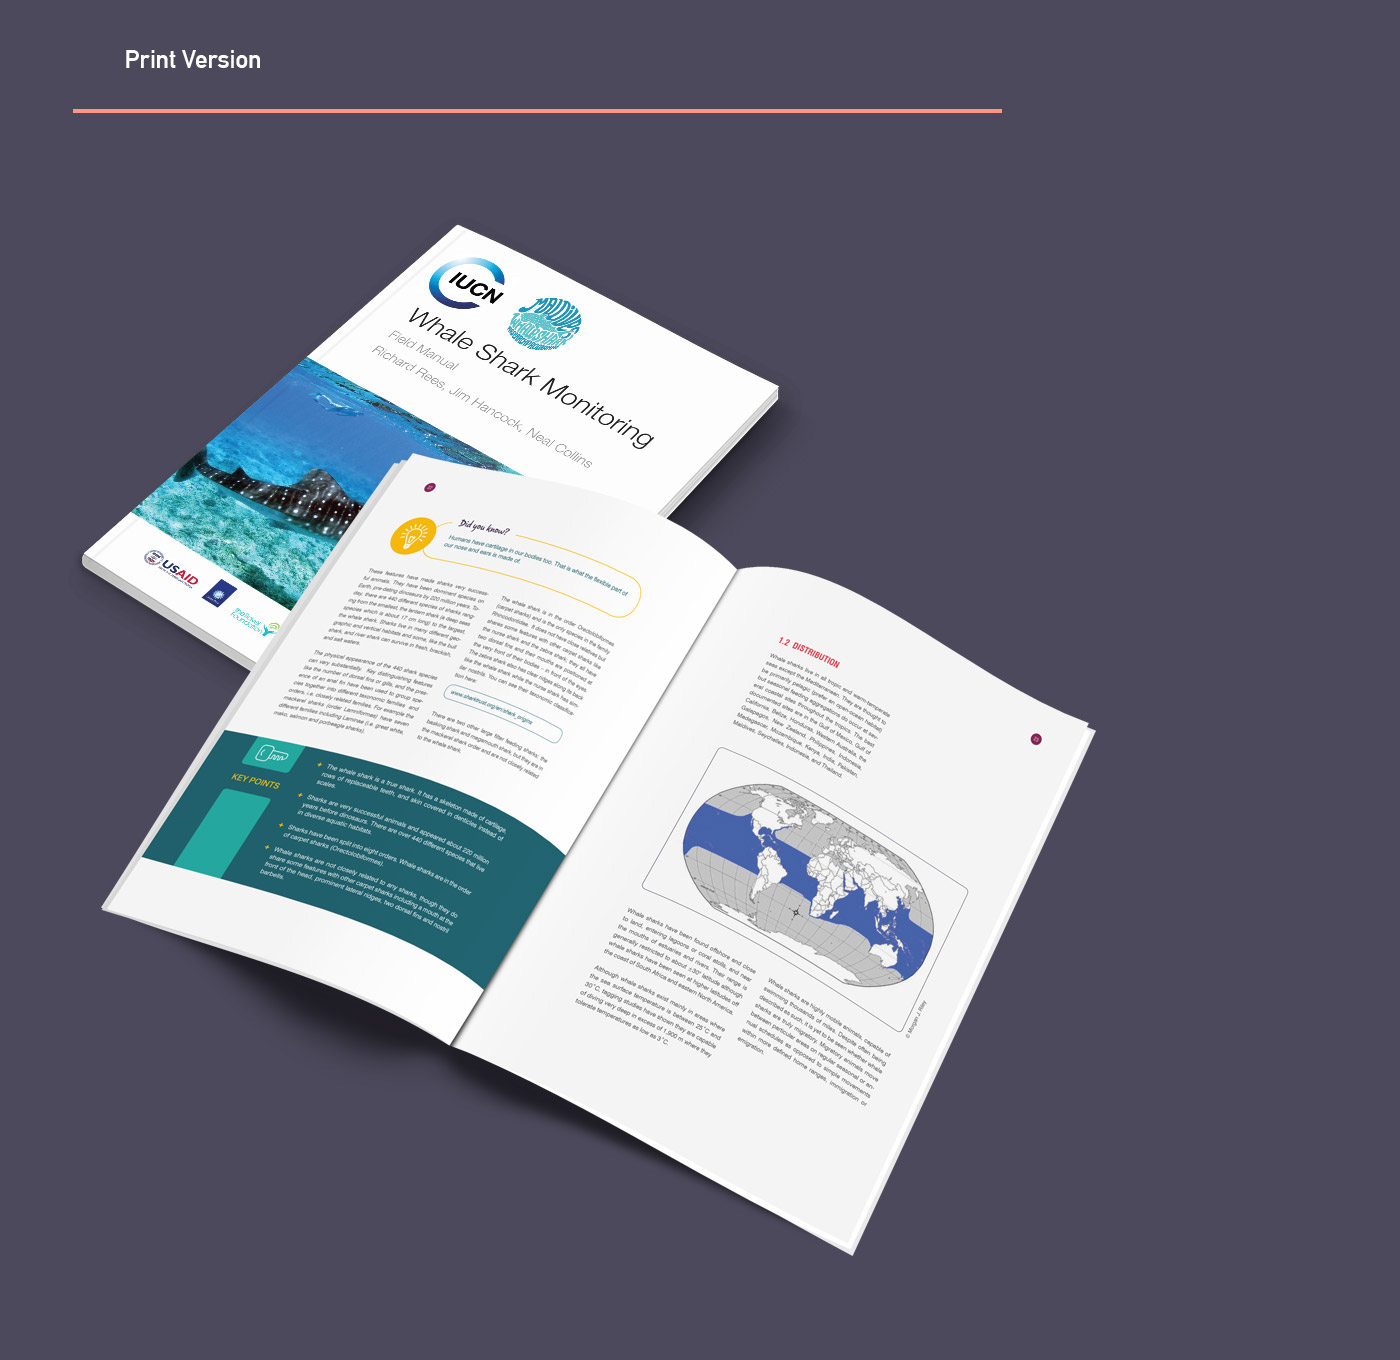 whale shark Maldives manual shinaz Interactive PDF iBook kindle report Layout publishing  